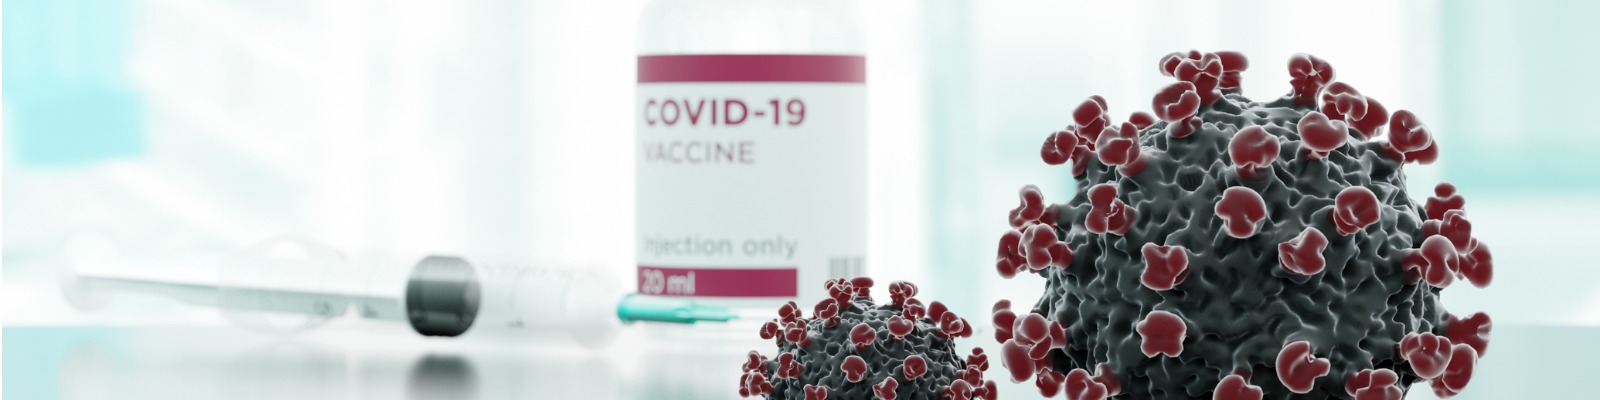 coronavirus-covid19-syringe-and-vaccine-1600x400